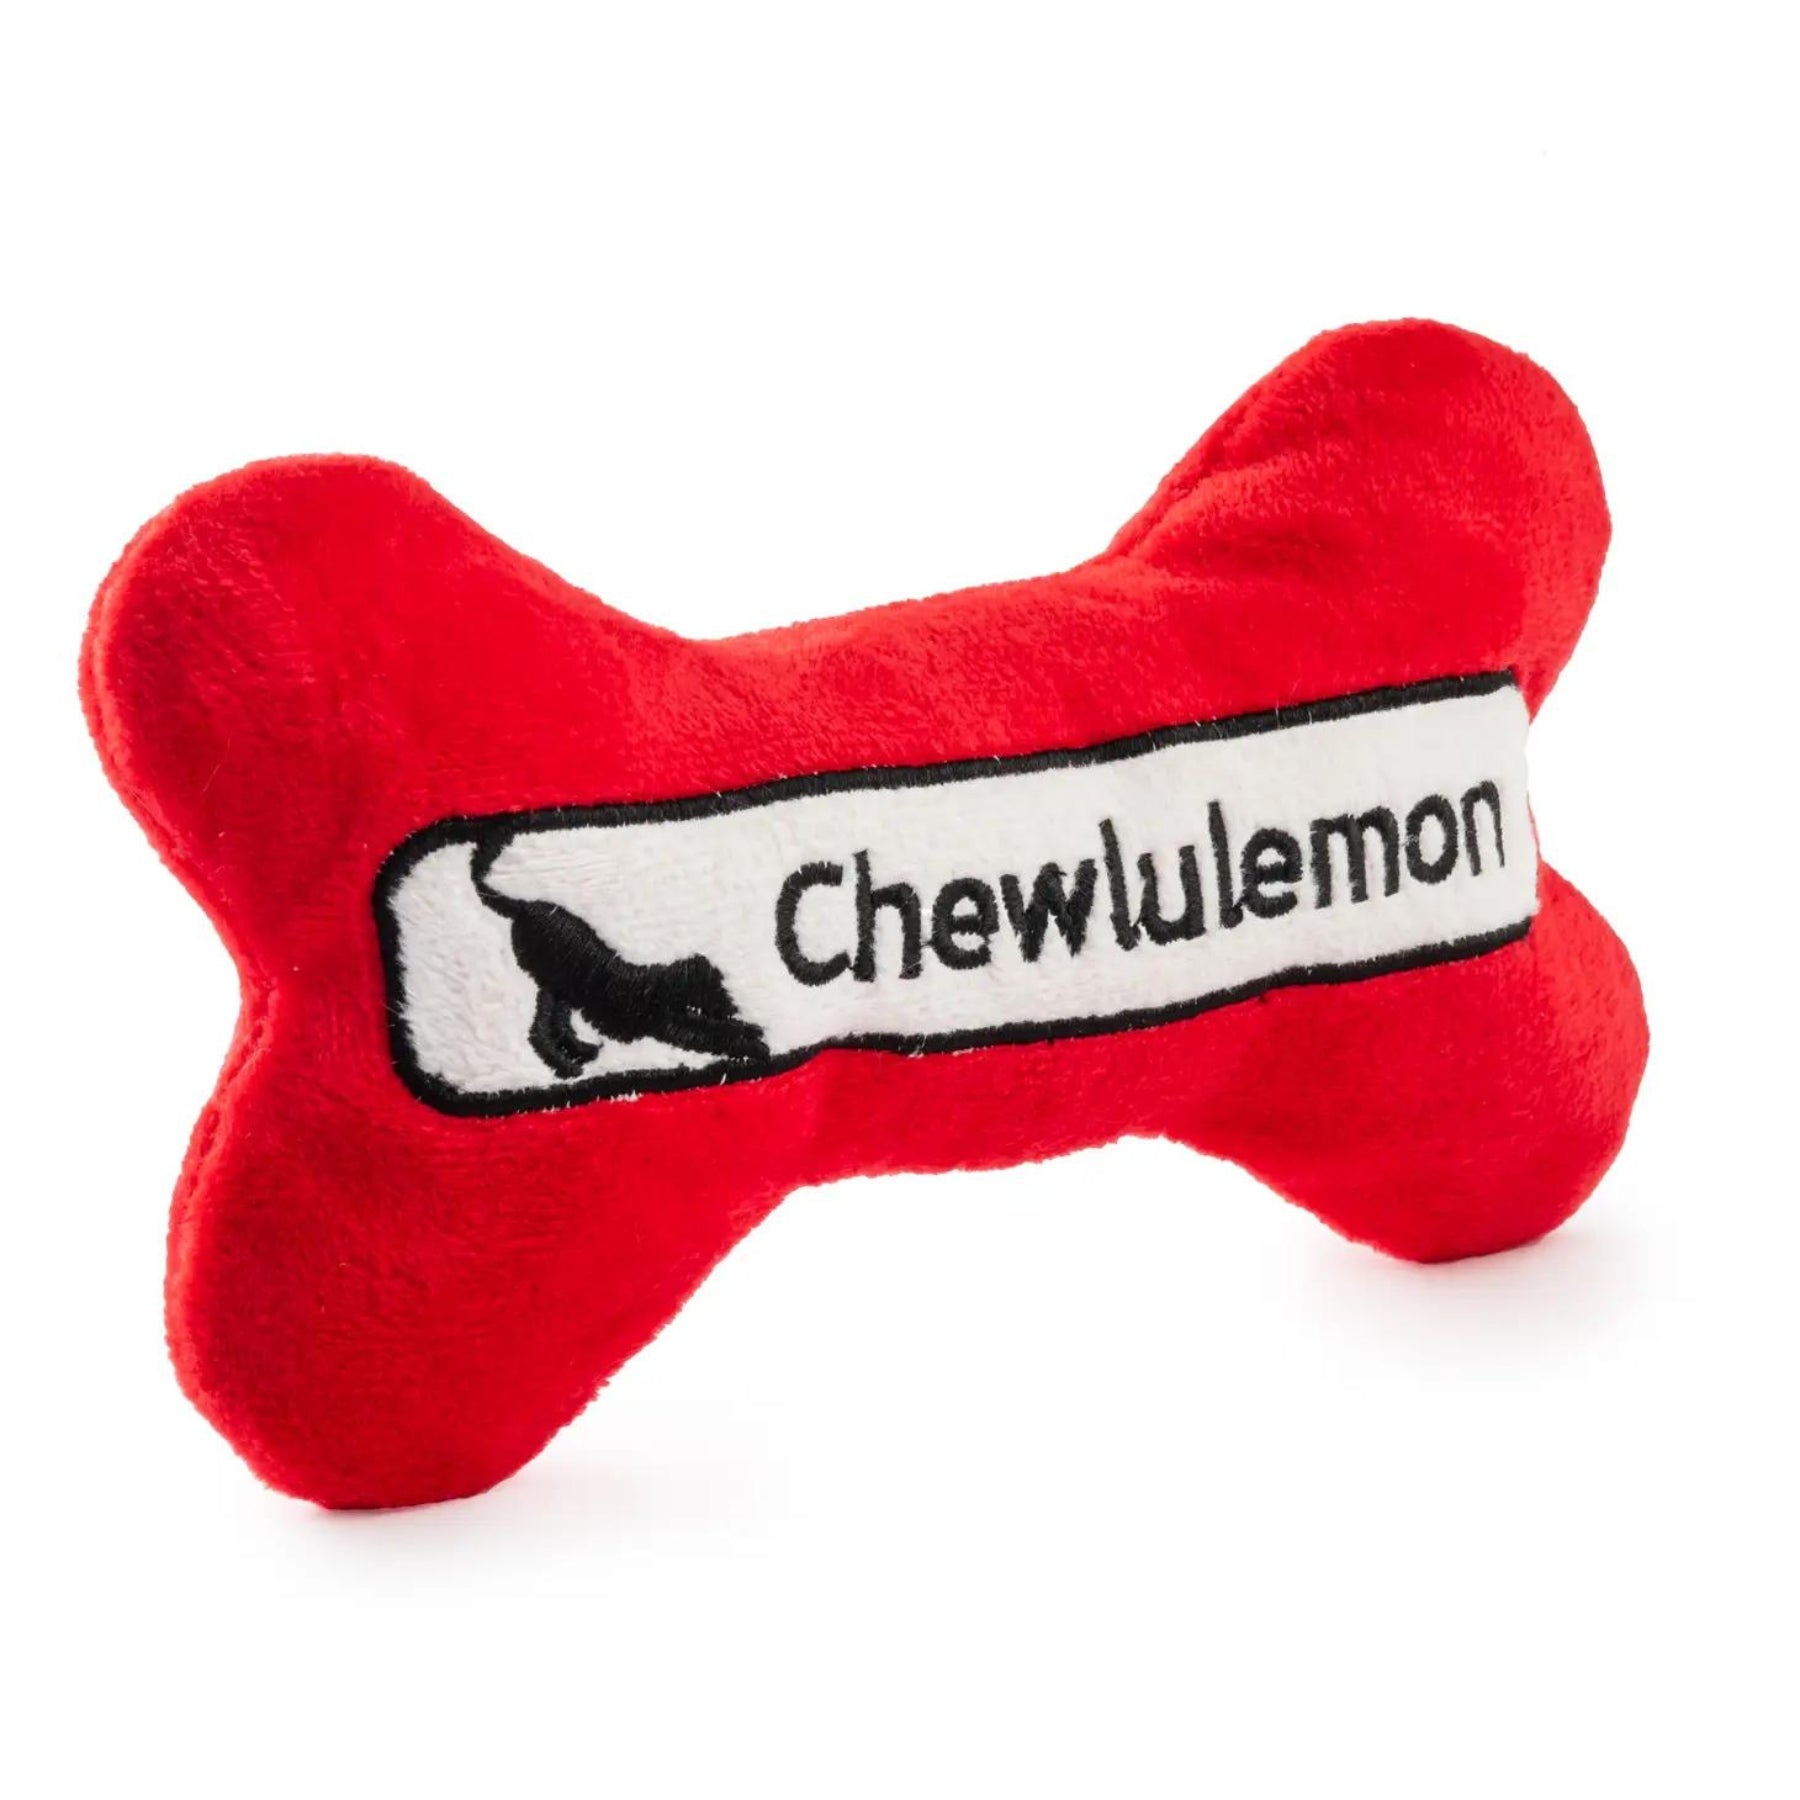 Chewlulemon Bone Dog Toy - Pooch Luxury